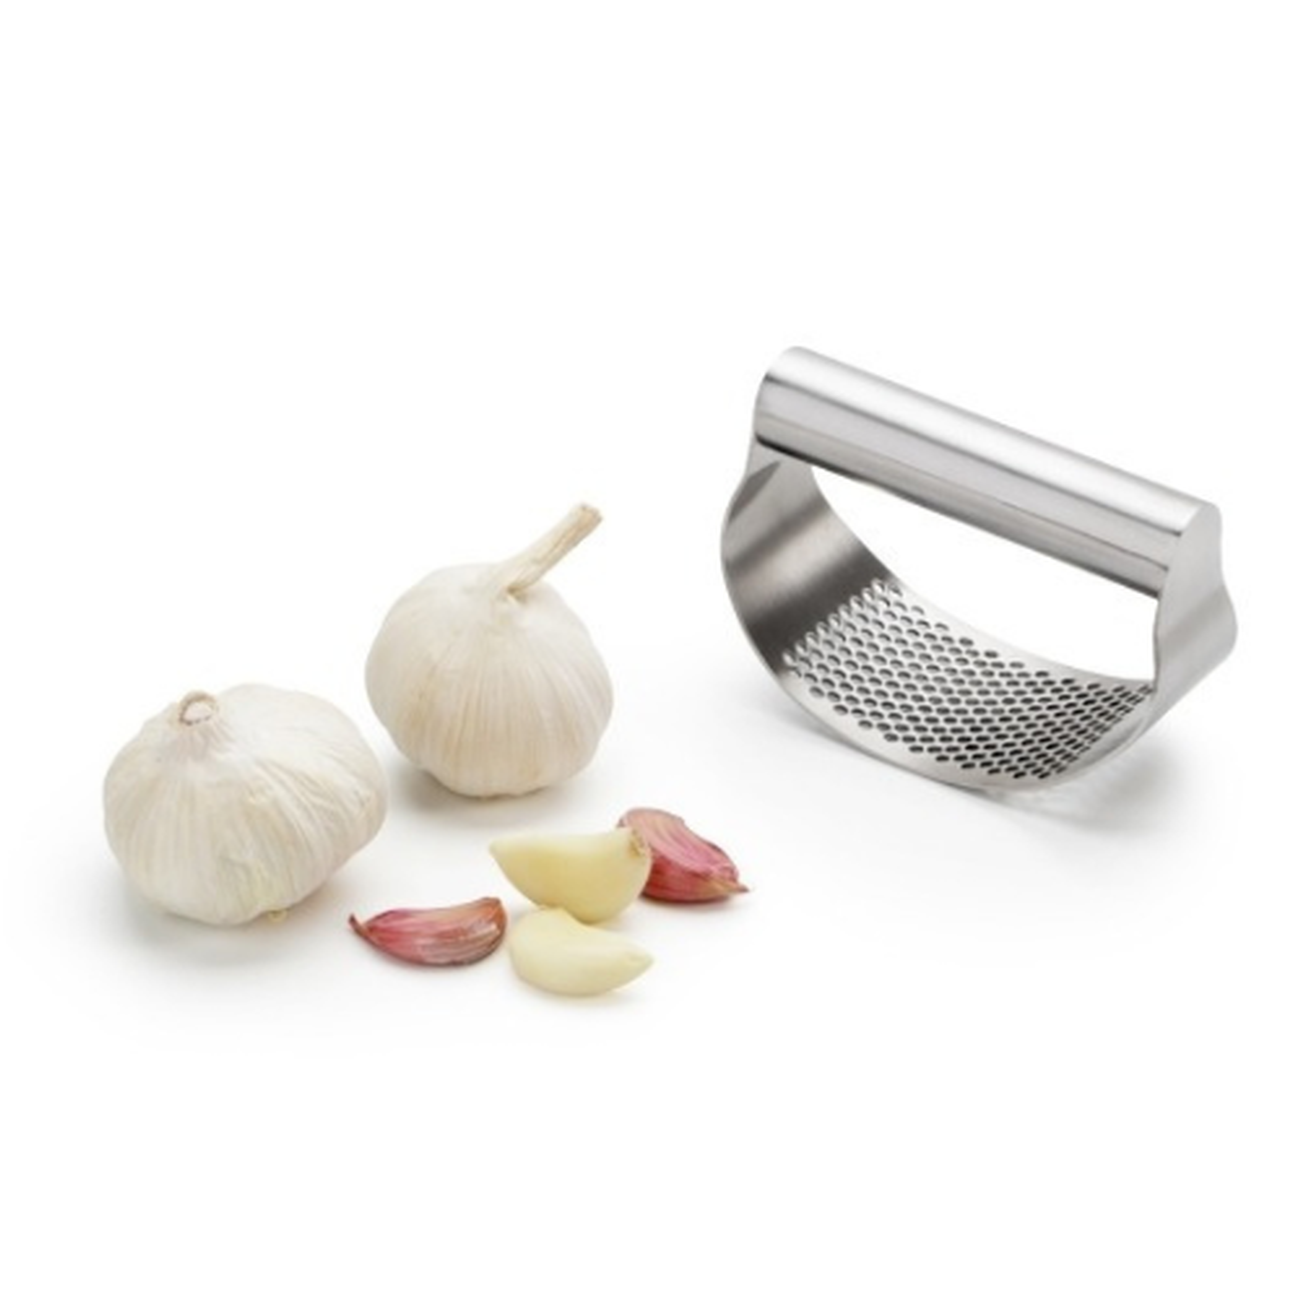 Garlic Press - Whisk